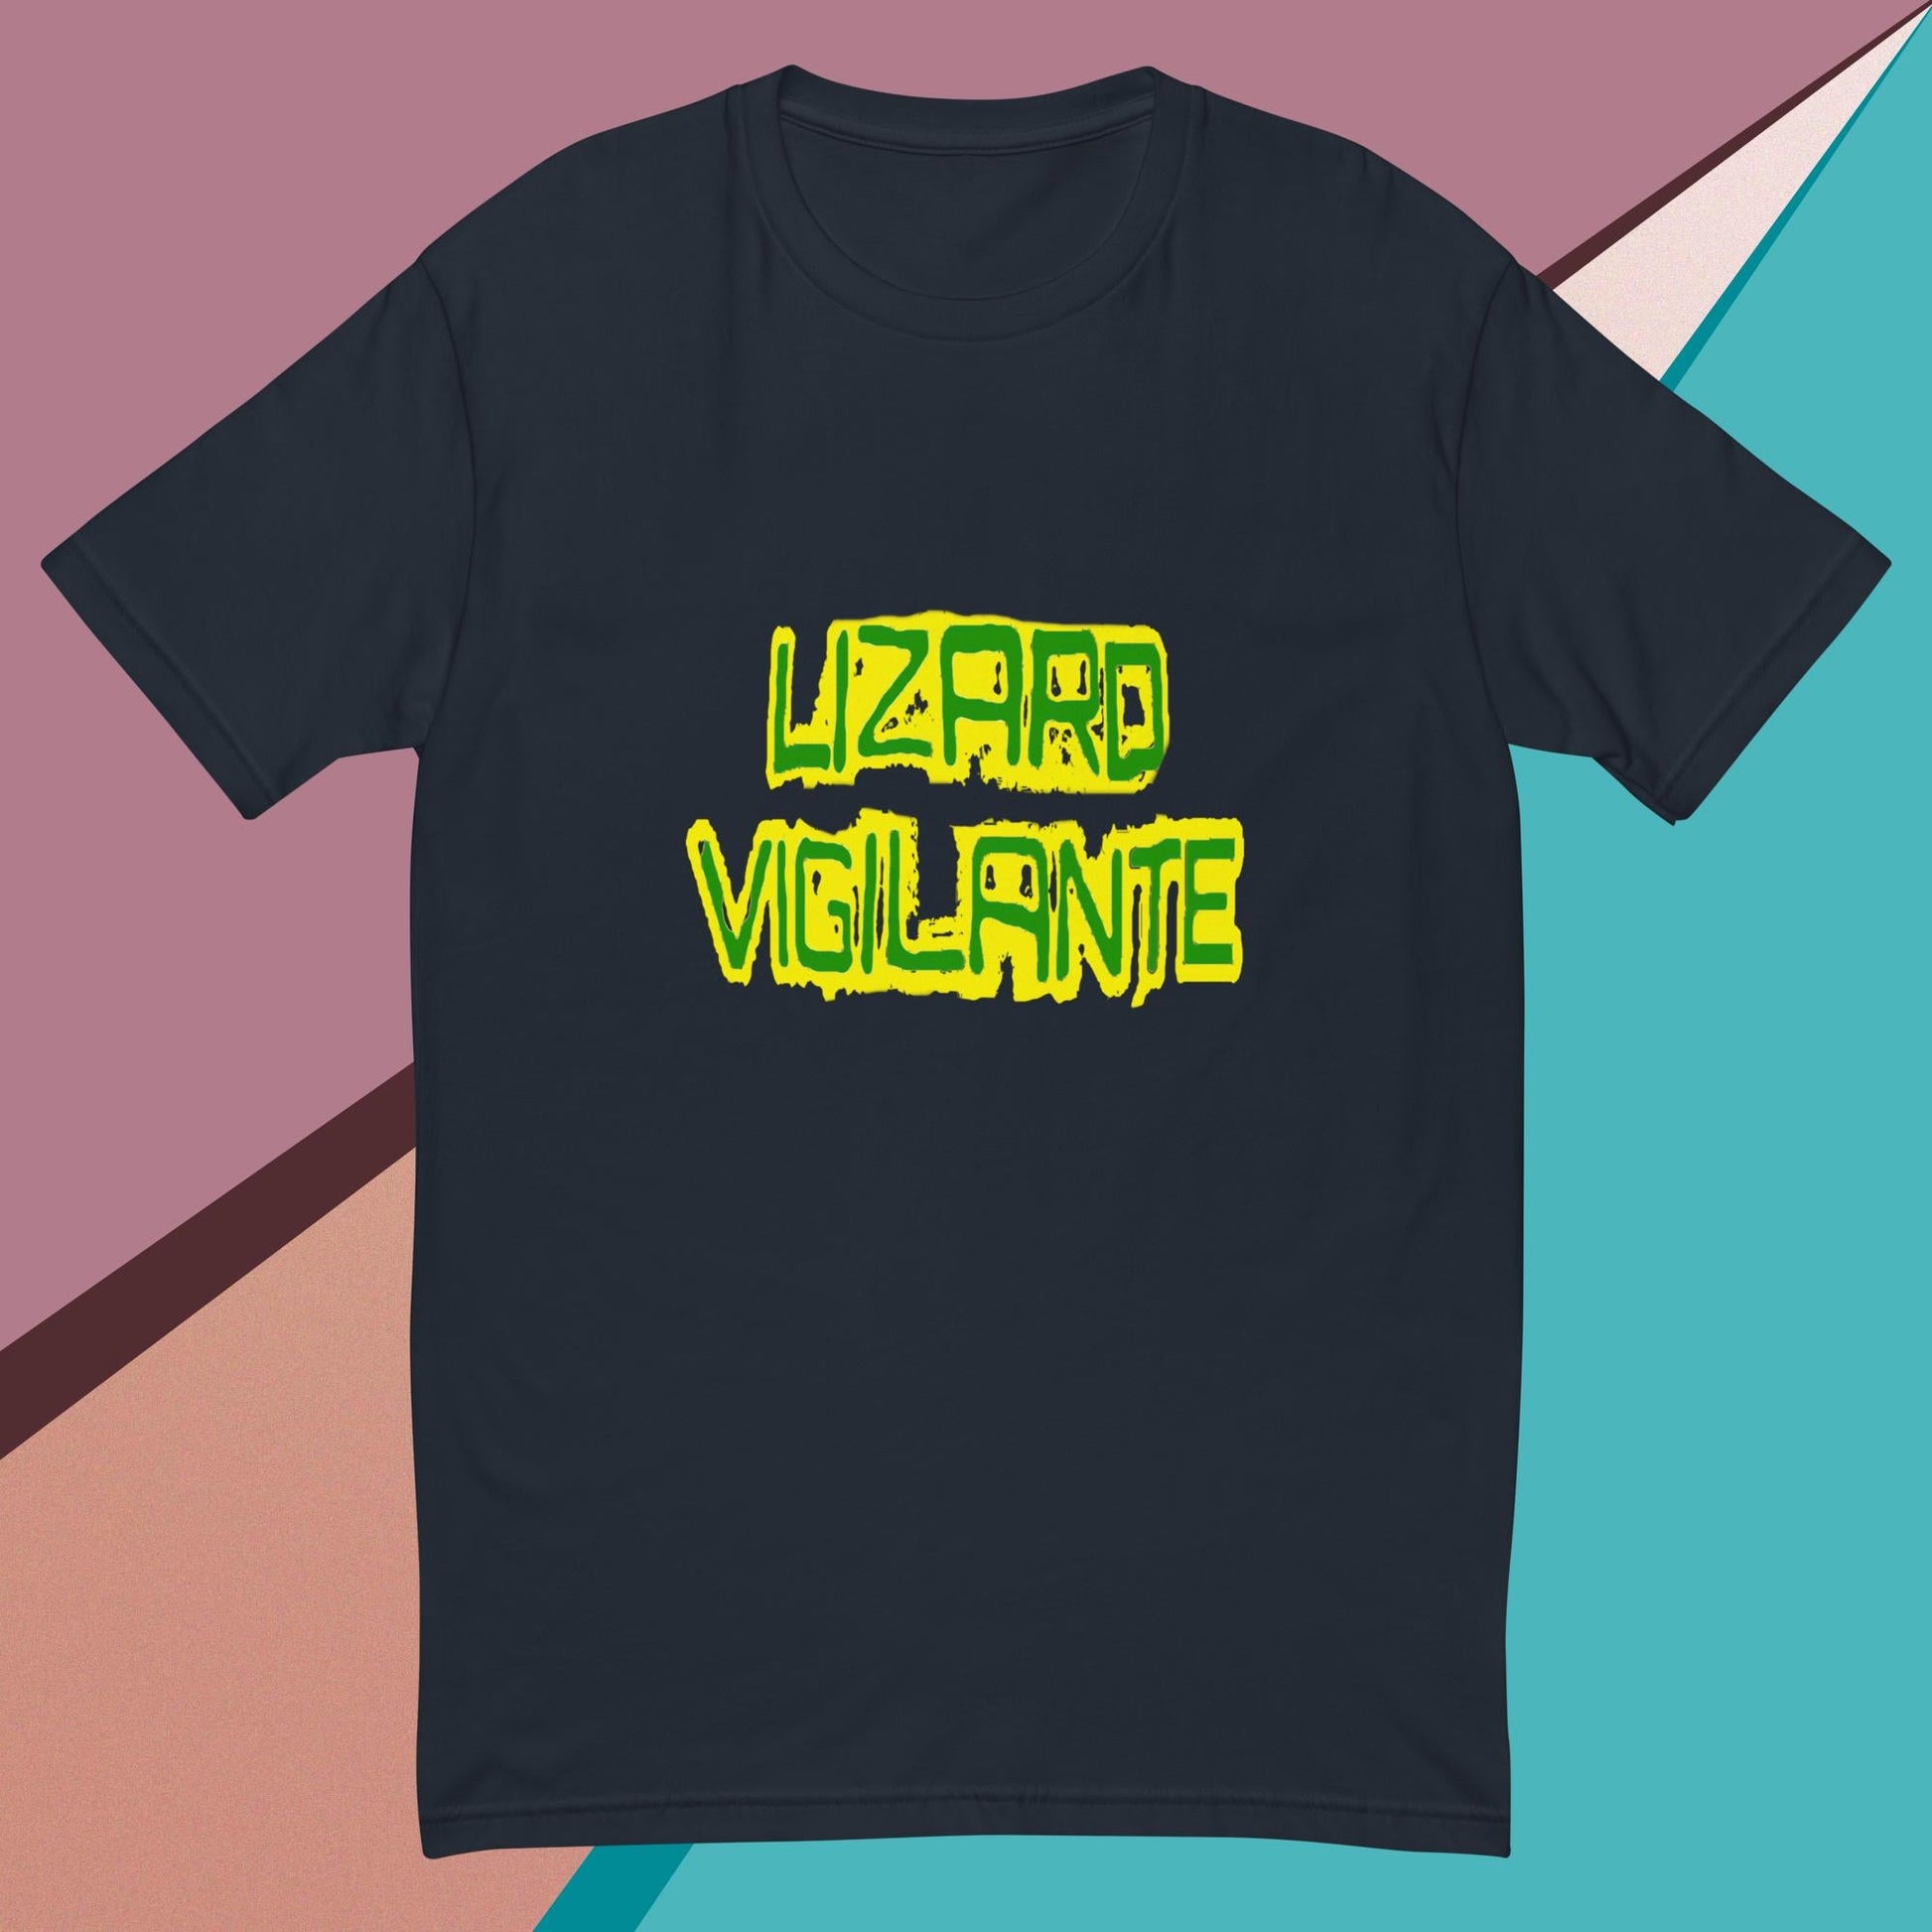 Green & Gold Lizard Vigilante Short Sleeve T-shirt LOGO TEE - Lizard Vigilante